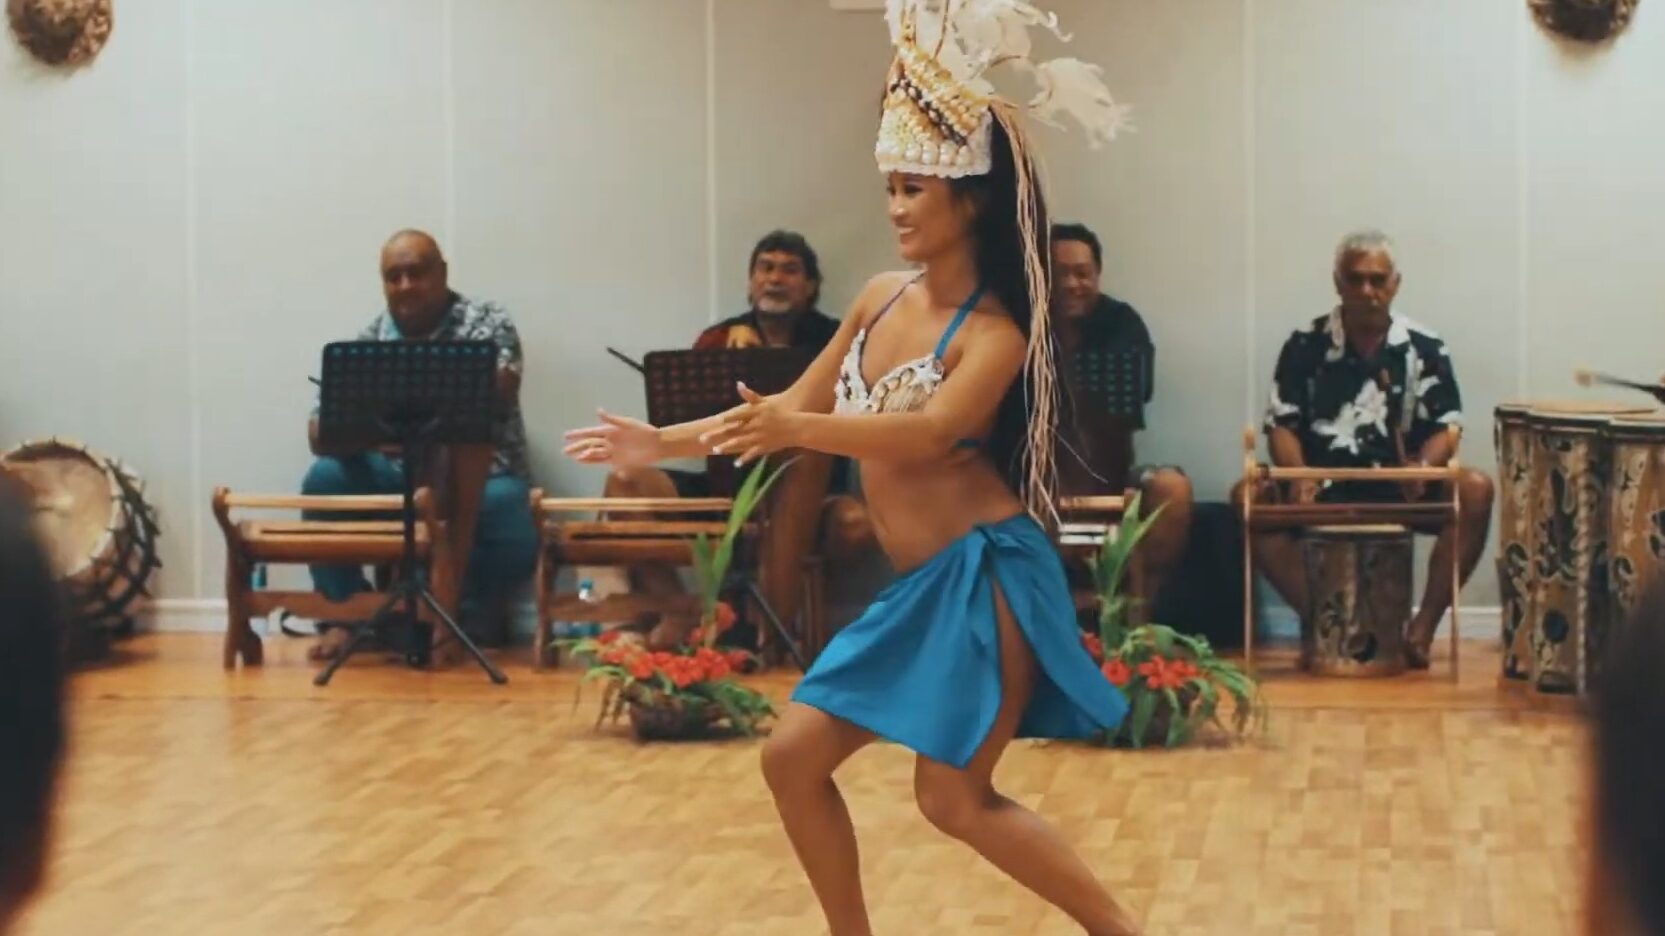 Tahitian woman dancing ori tahiti to live drums in the class room